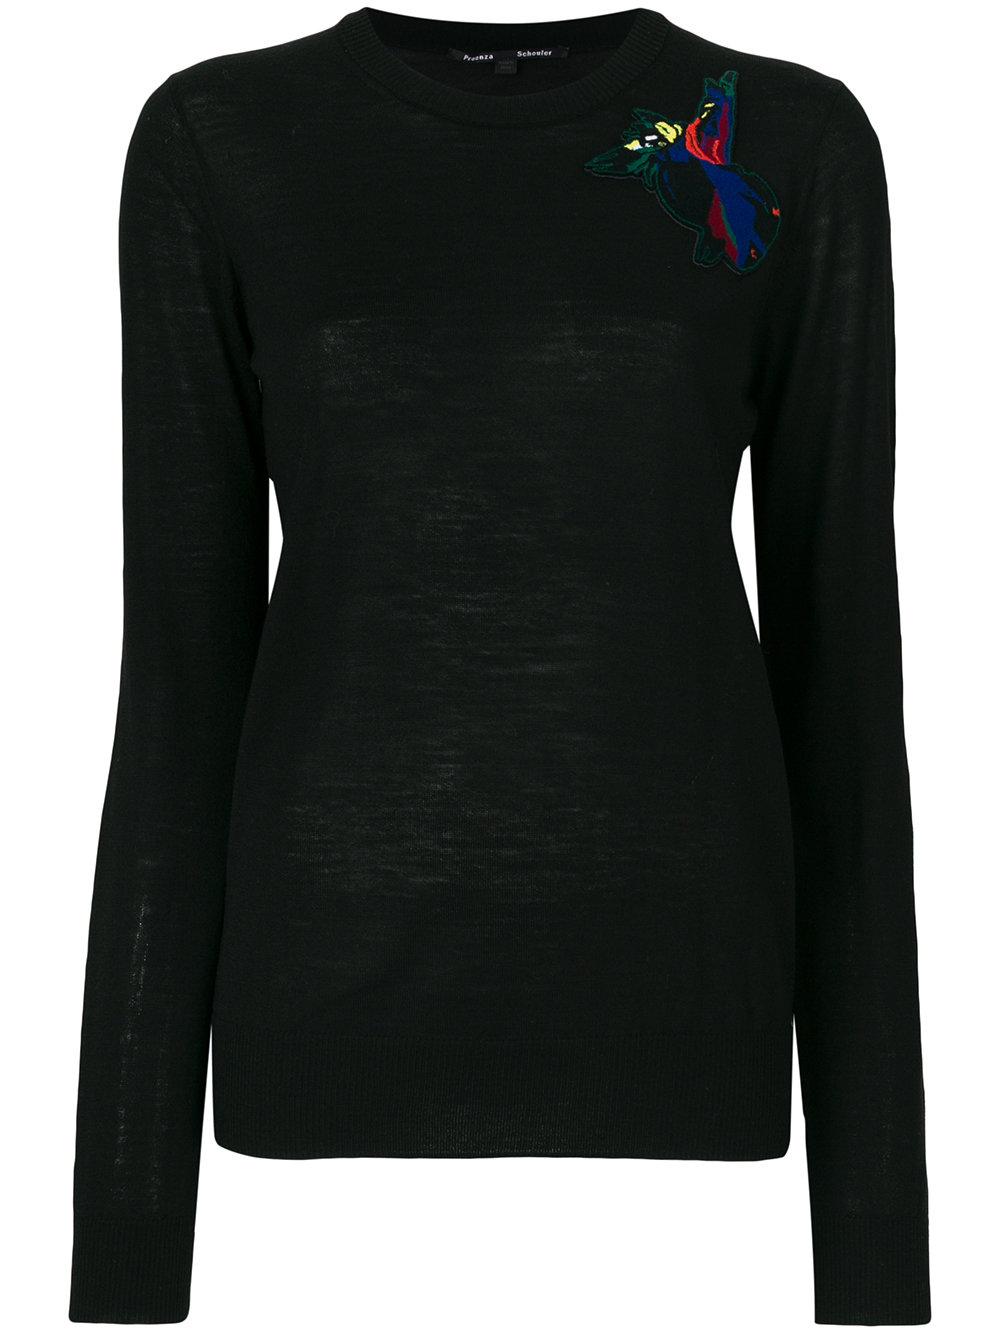 Proenza Schouler Shoulder Zipped Sweater in Black - Lyst